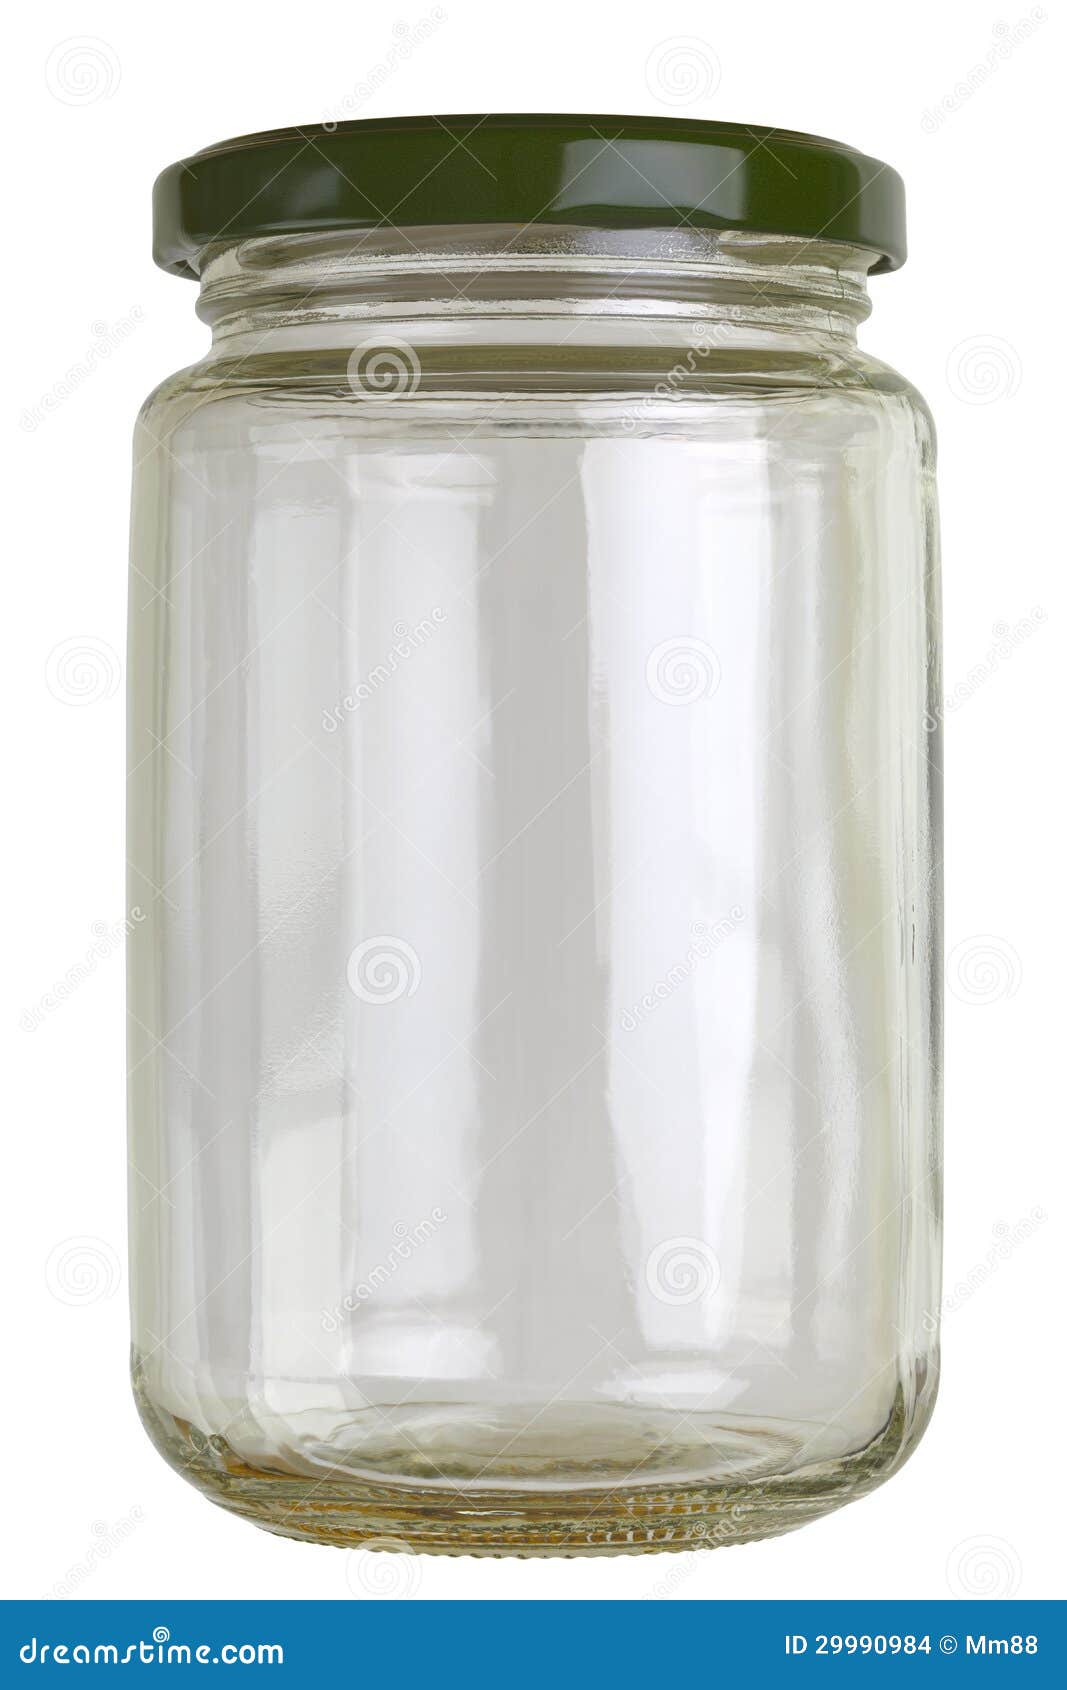 preserving jar